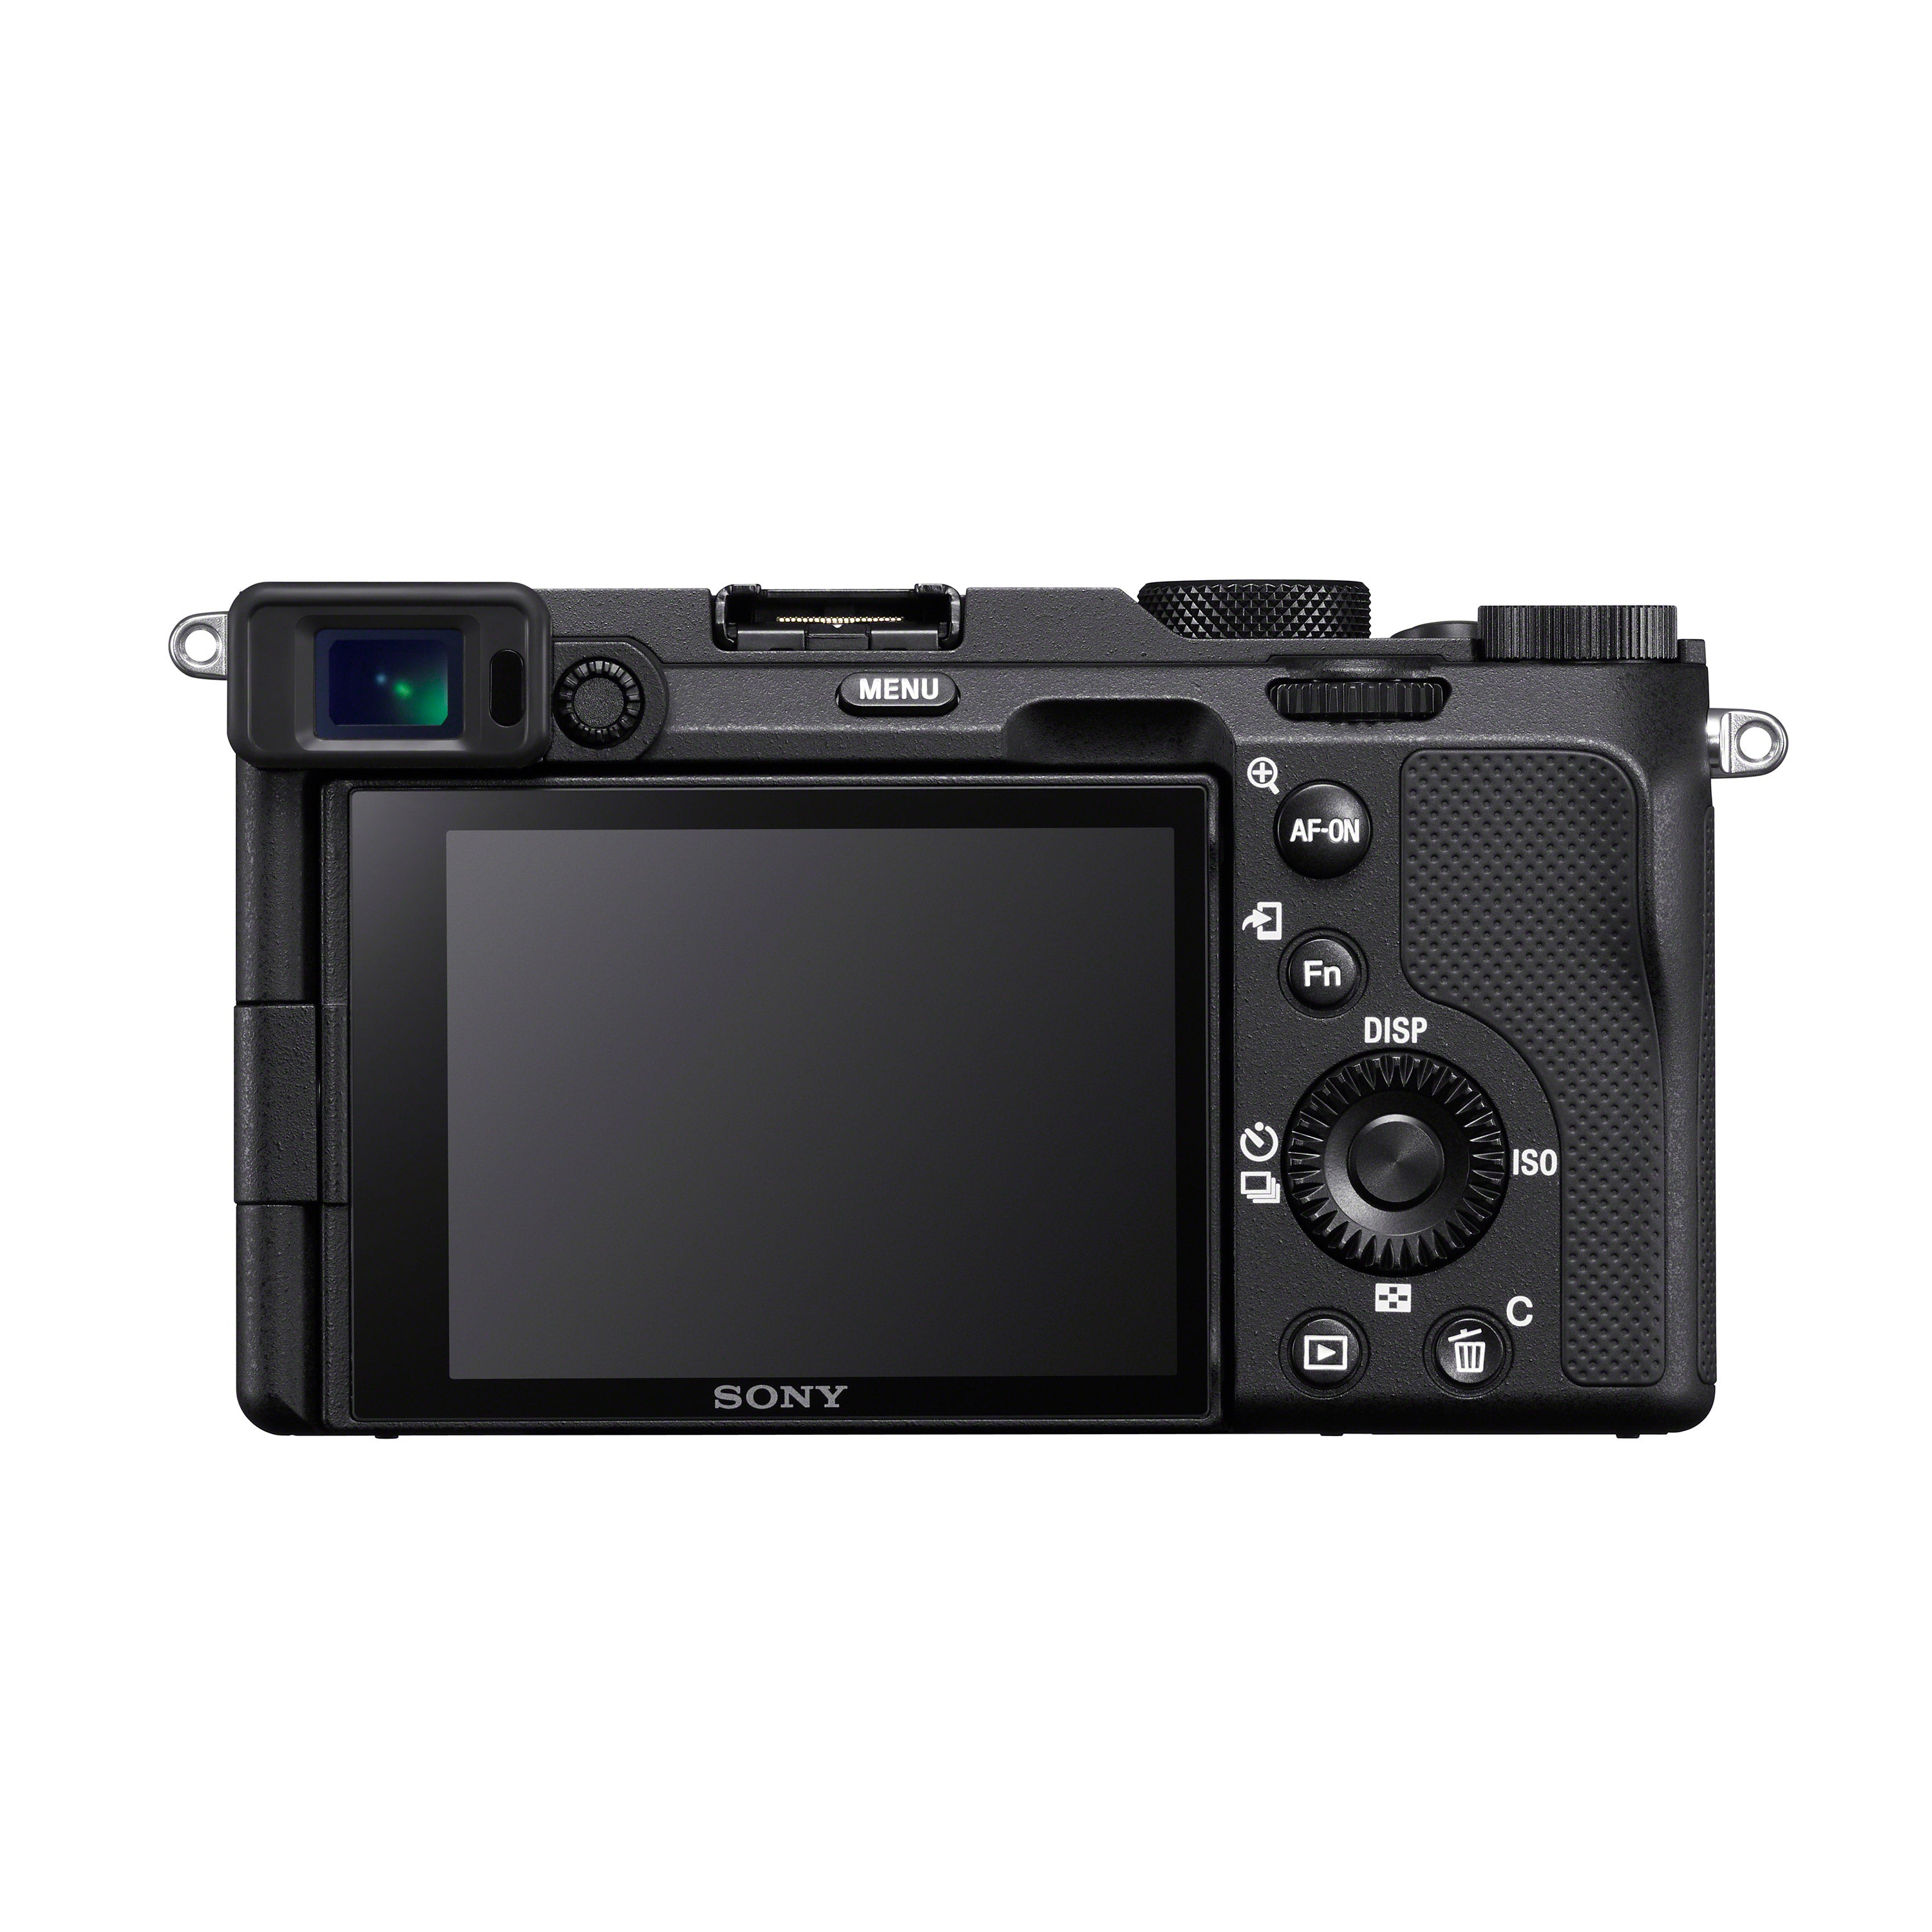 Sony a7C Compact full-frame camera (Black)